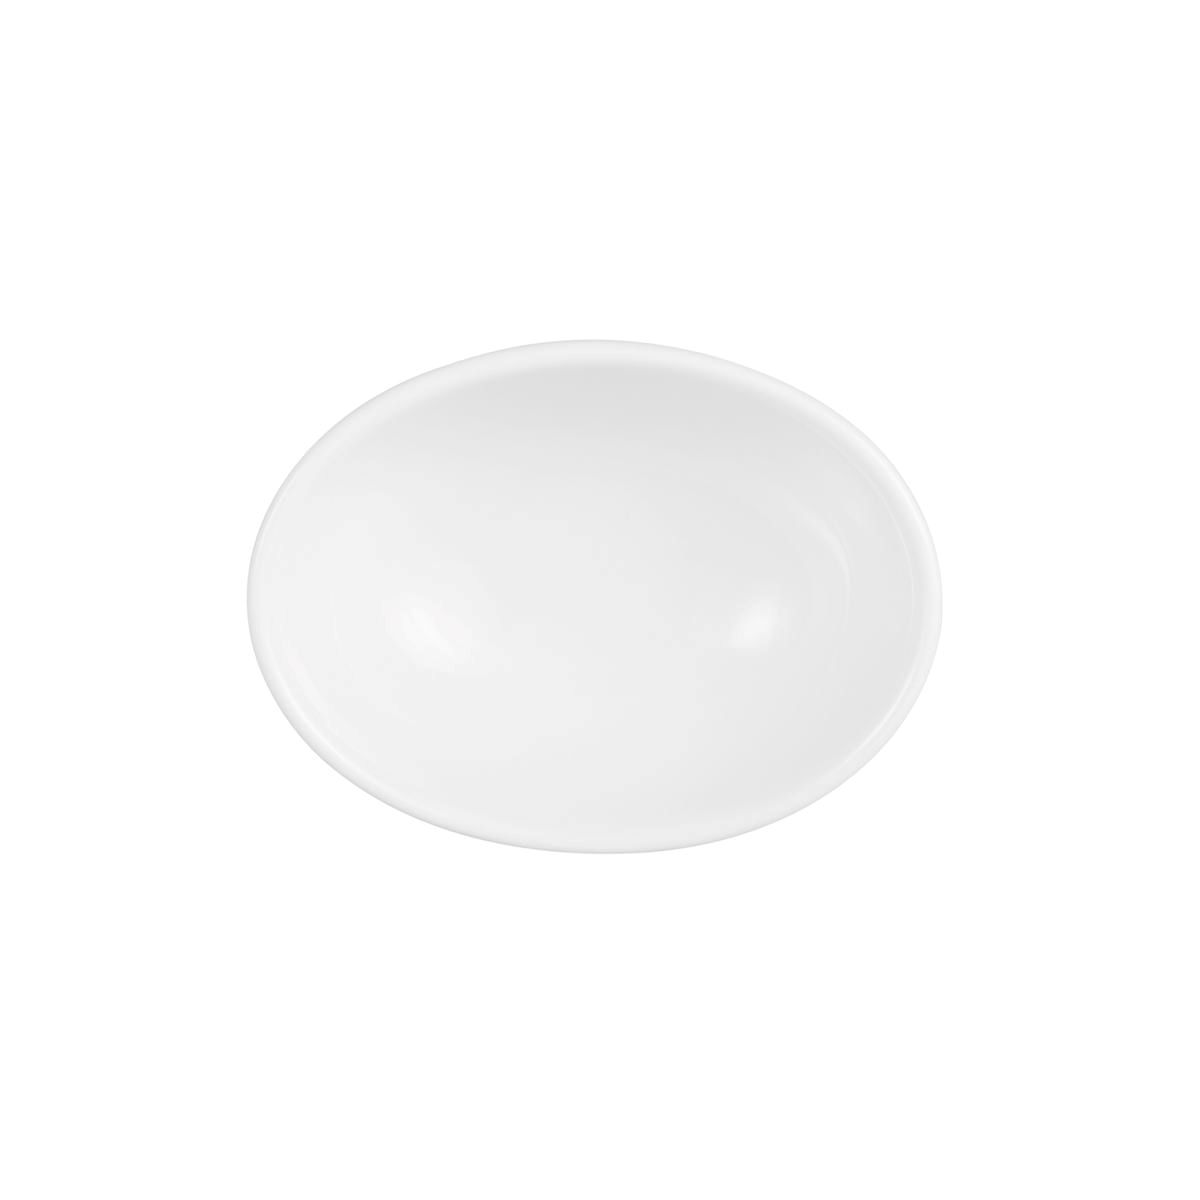 Bowl oval M5307  9 cm - Serie Meran